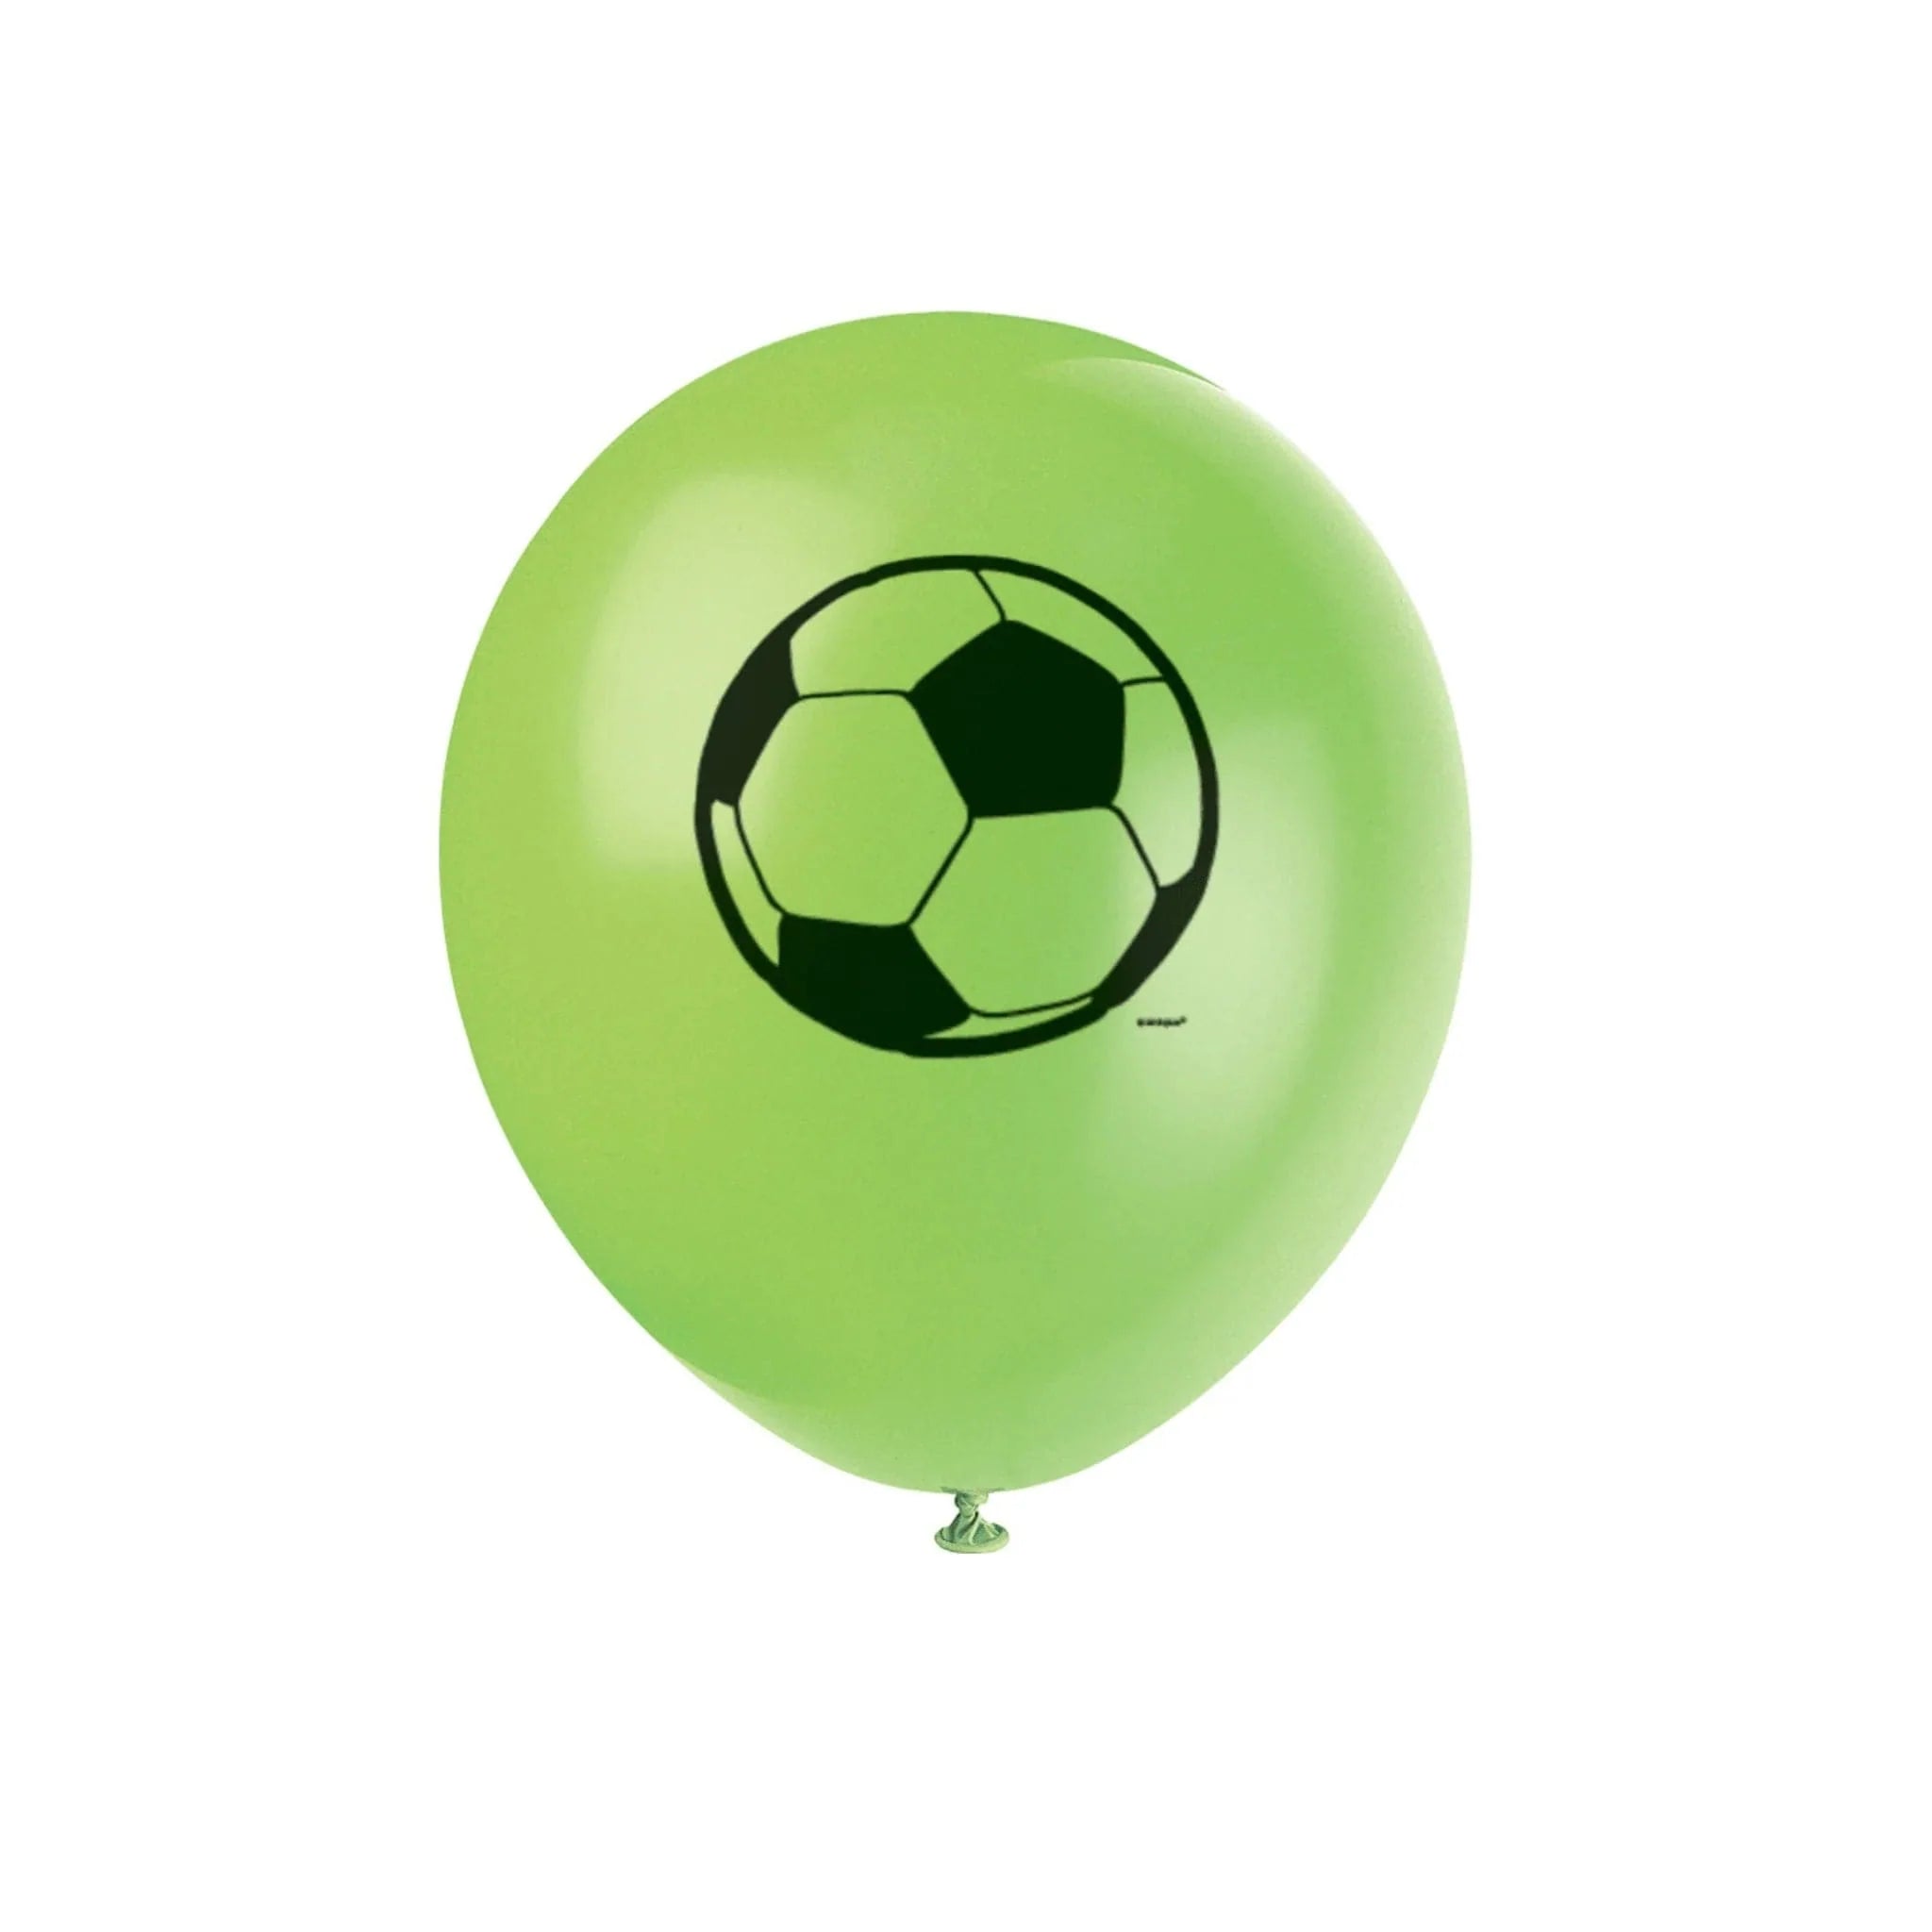 Football 12" Latex Balloons 8pk - Kids Party Craft